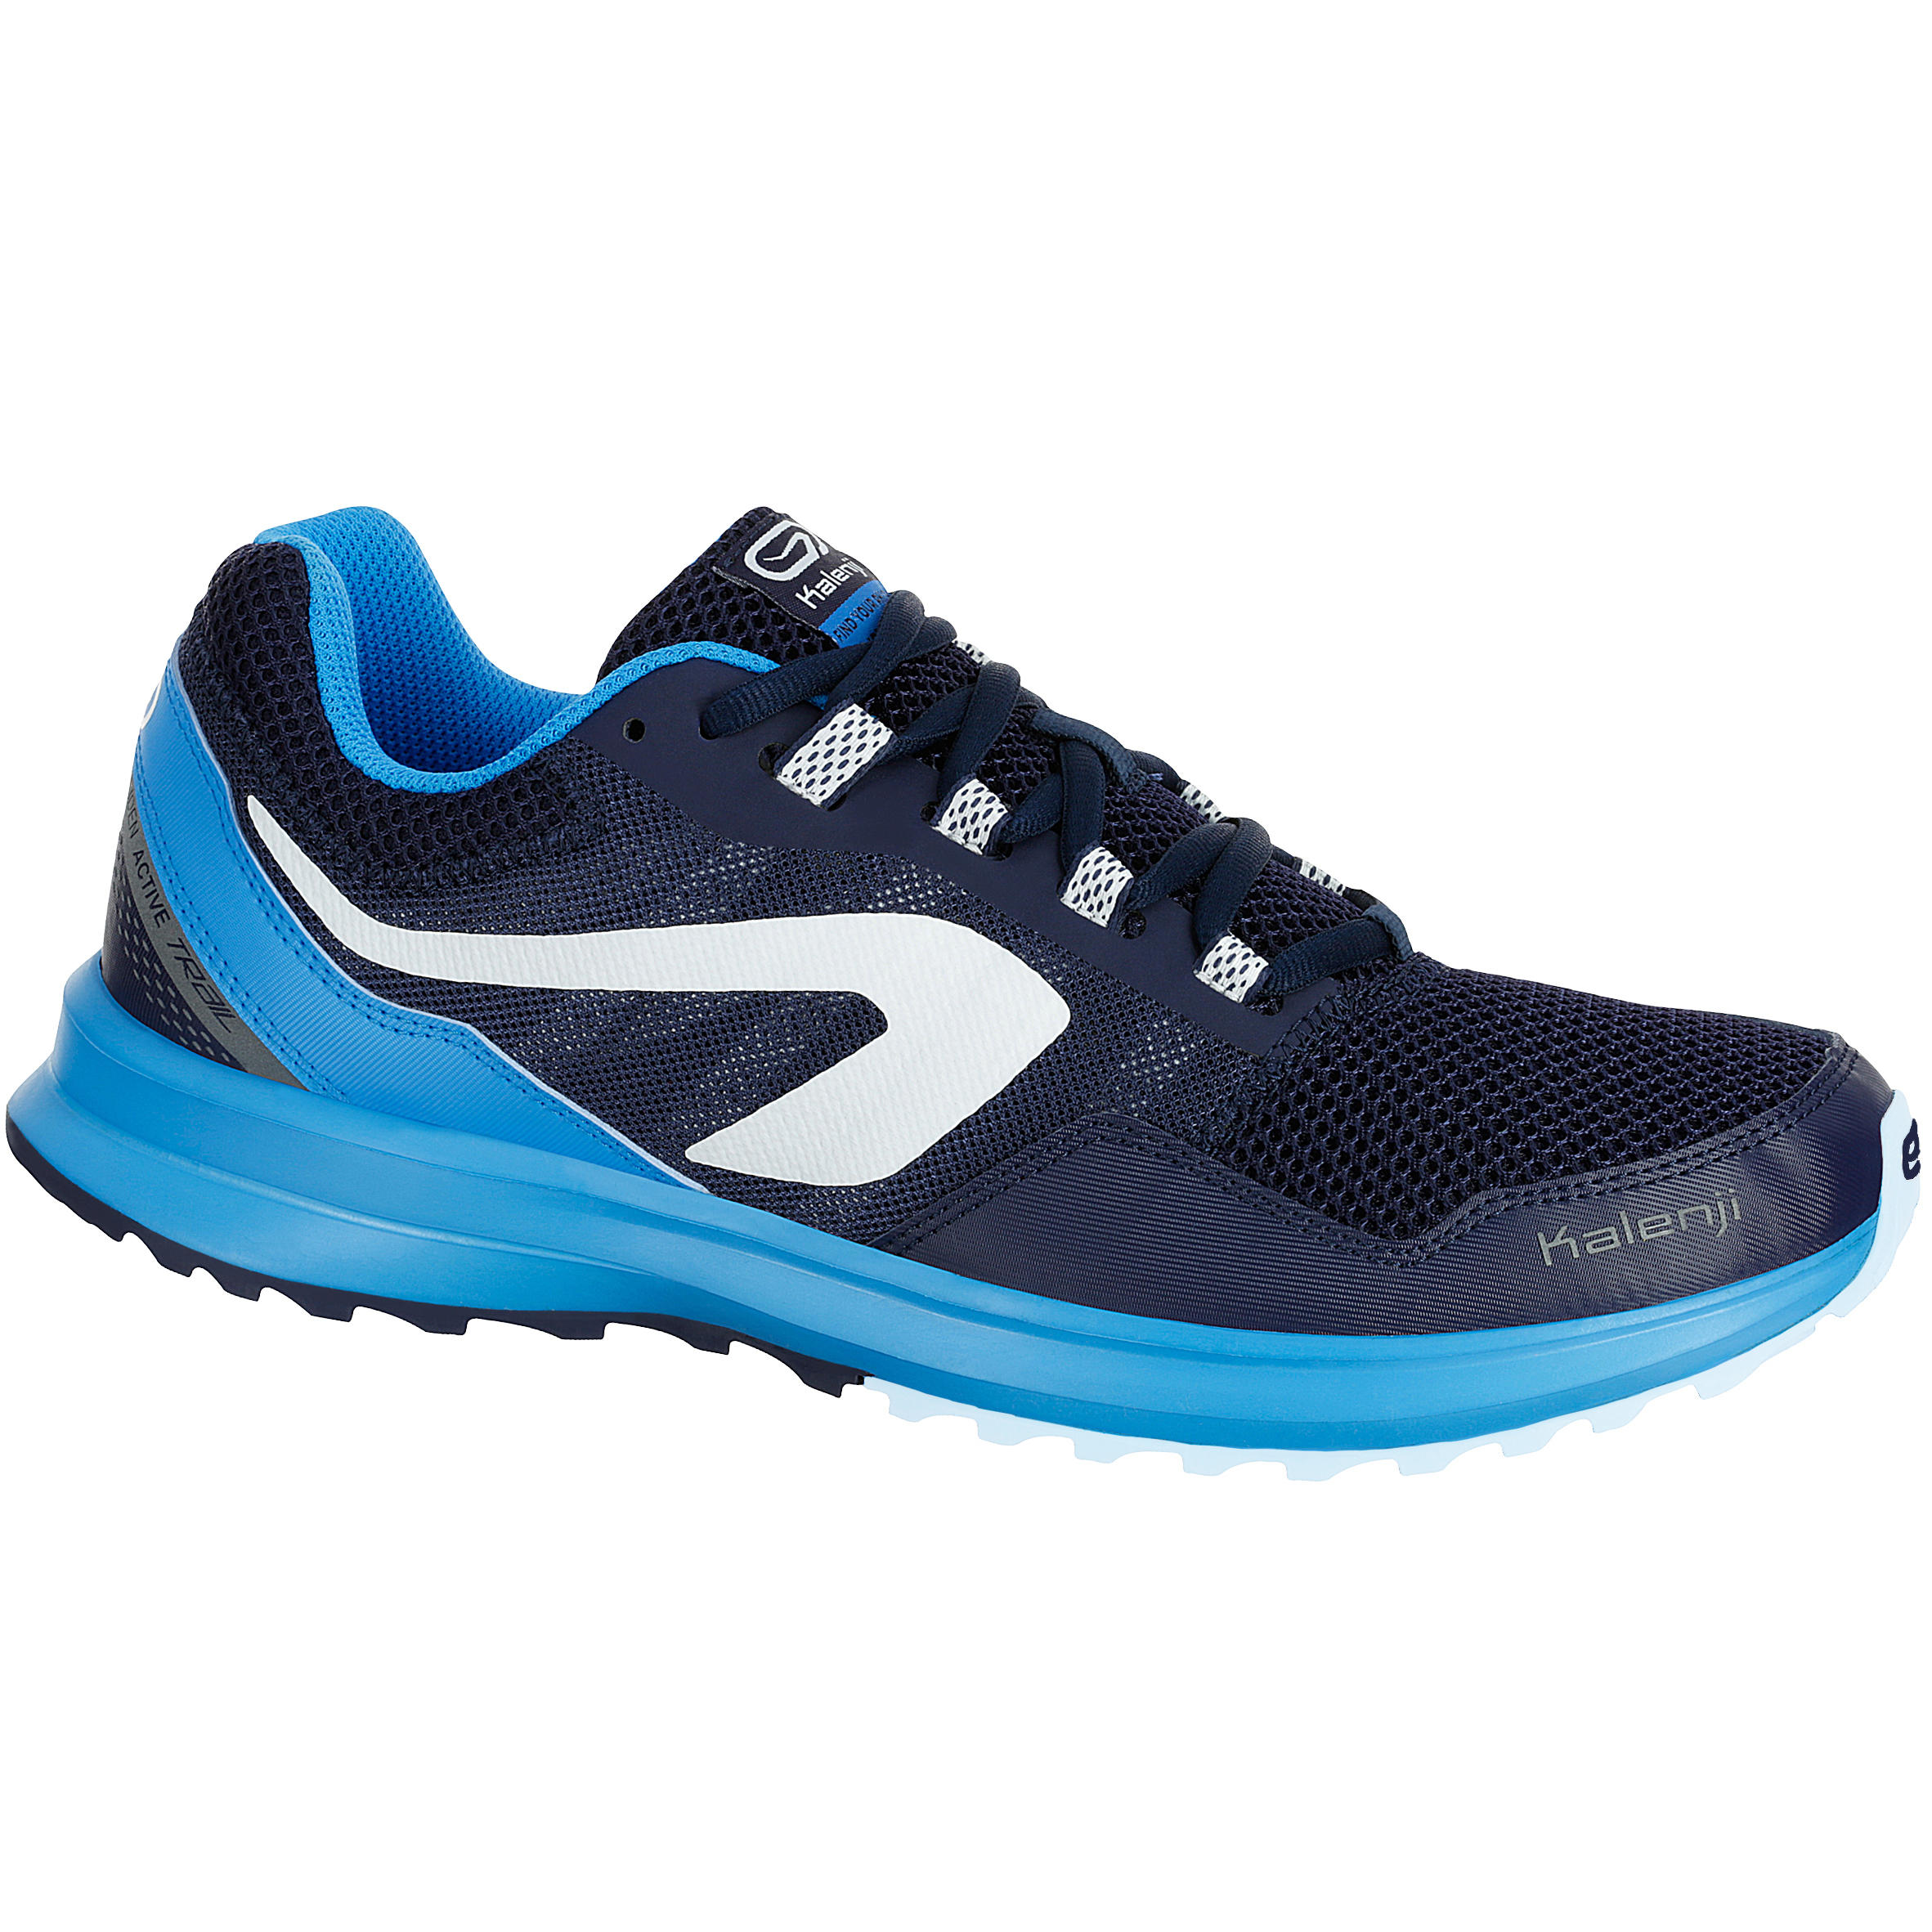 KALENJI Ekiden Active Trail Men's Trail Running Shoes - Blue